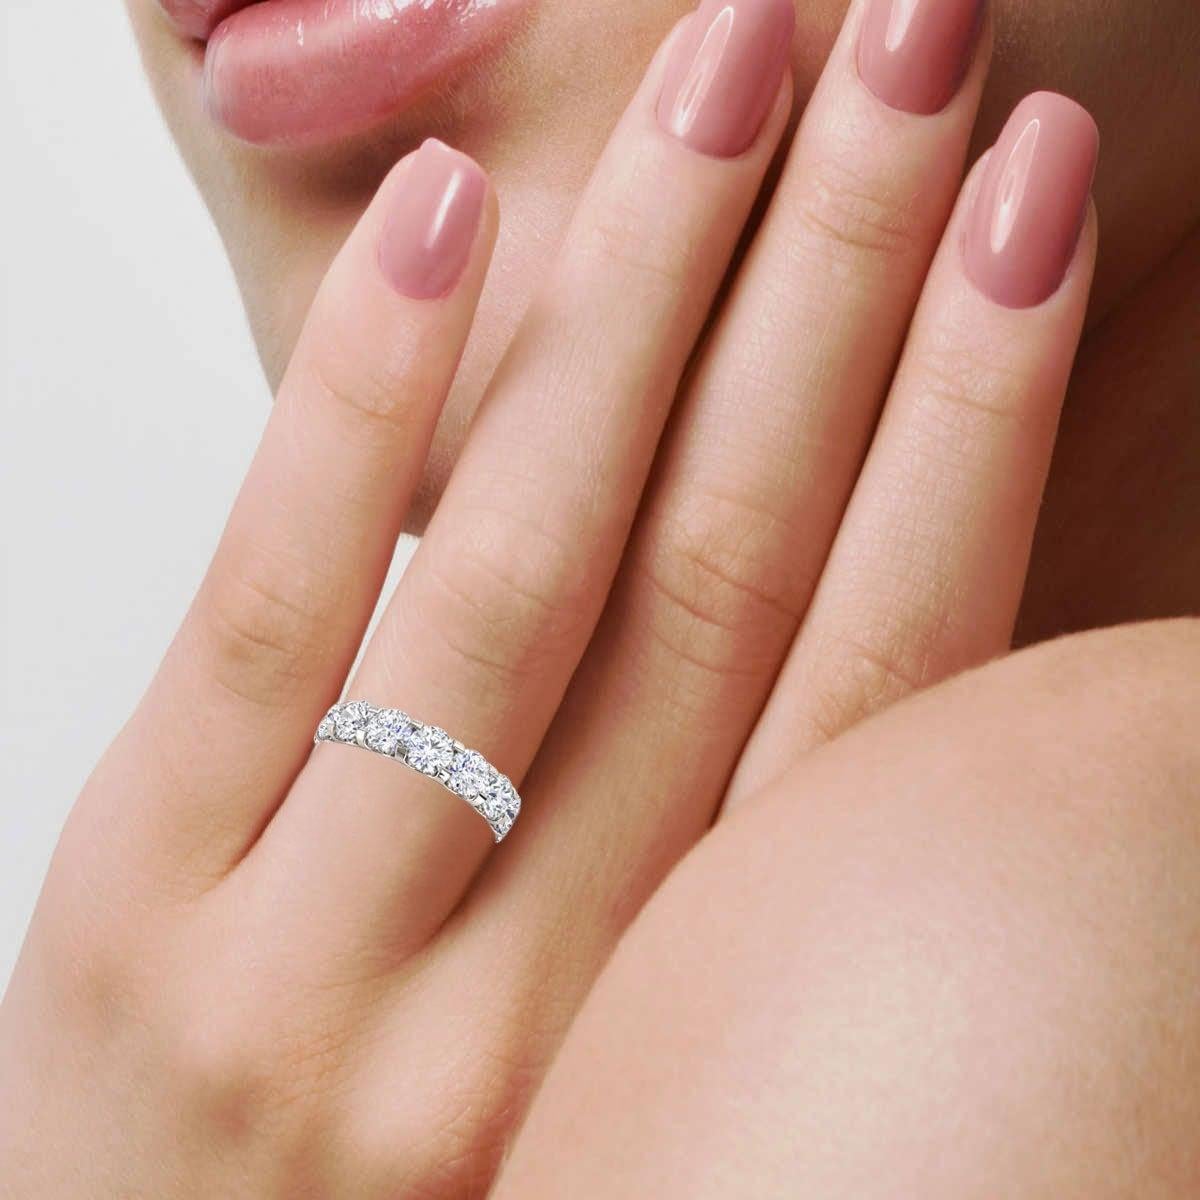 For Sale:  14k White Gold Valerie Micro-Prong Diamond Ring '2 Ct. tw' 3